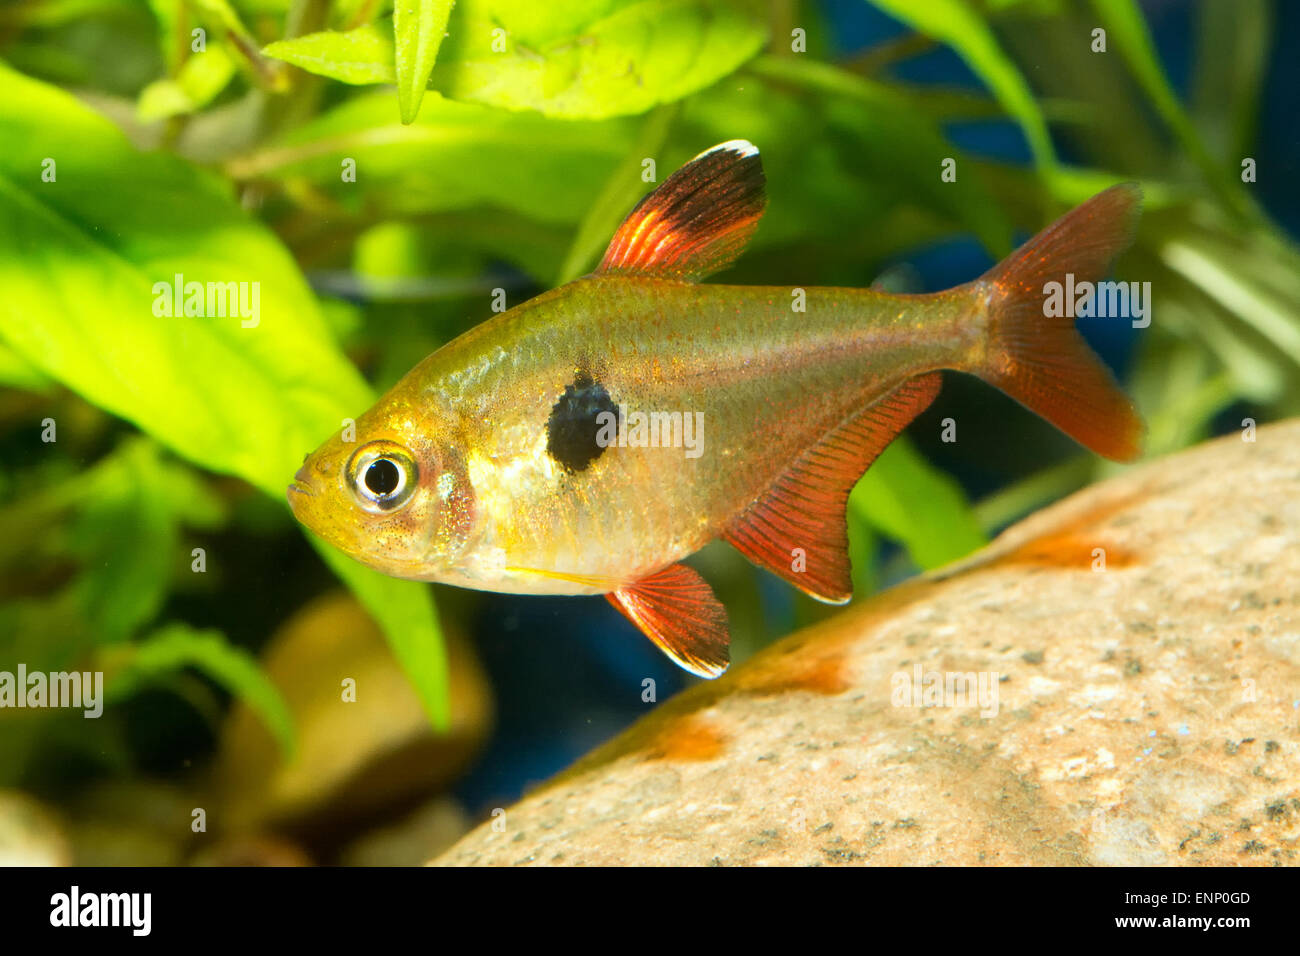 Nice aquarium tetra fish from the genus Hyphessobrycon. Stock Photo